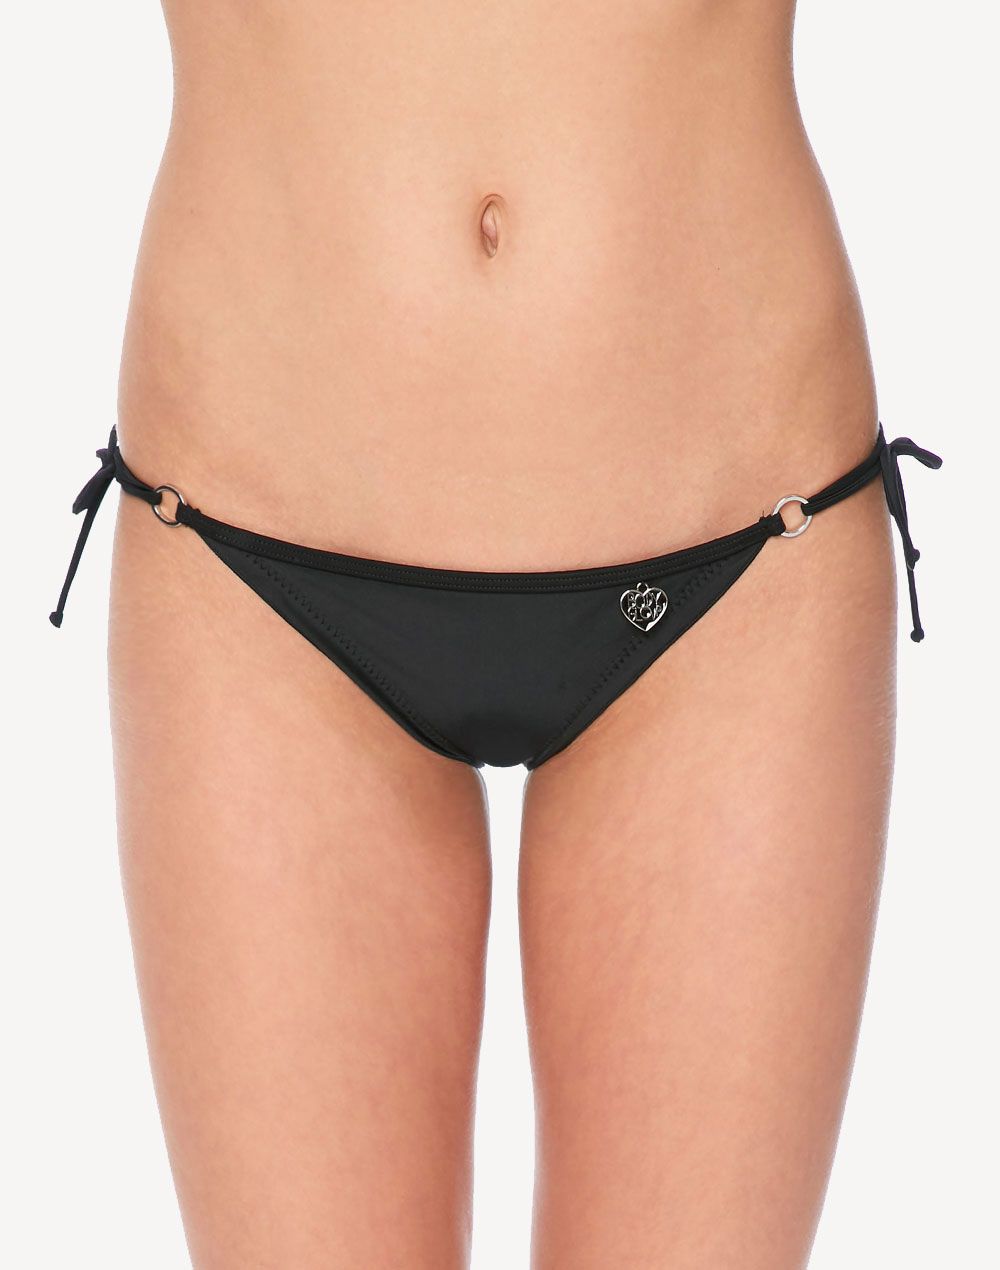 Matira Adjustable Brasilia Bikini Bottom - Black - Body Glove